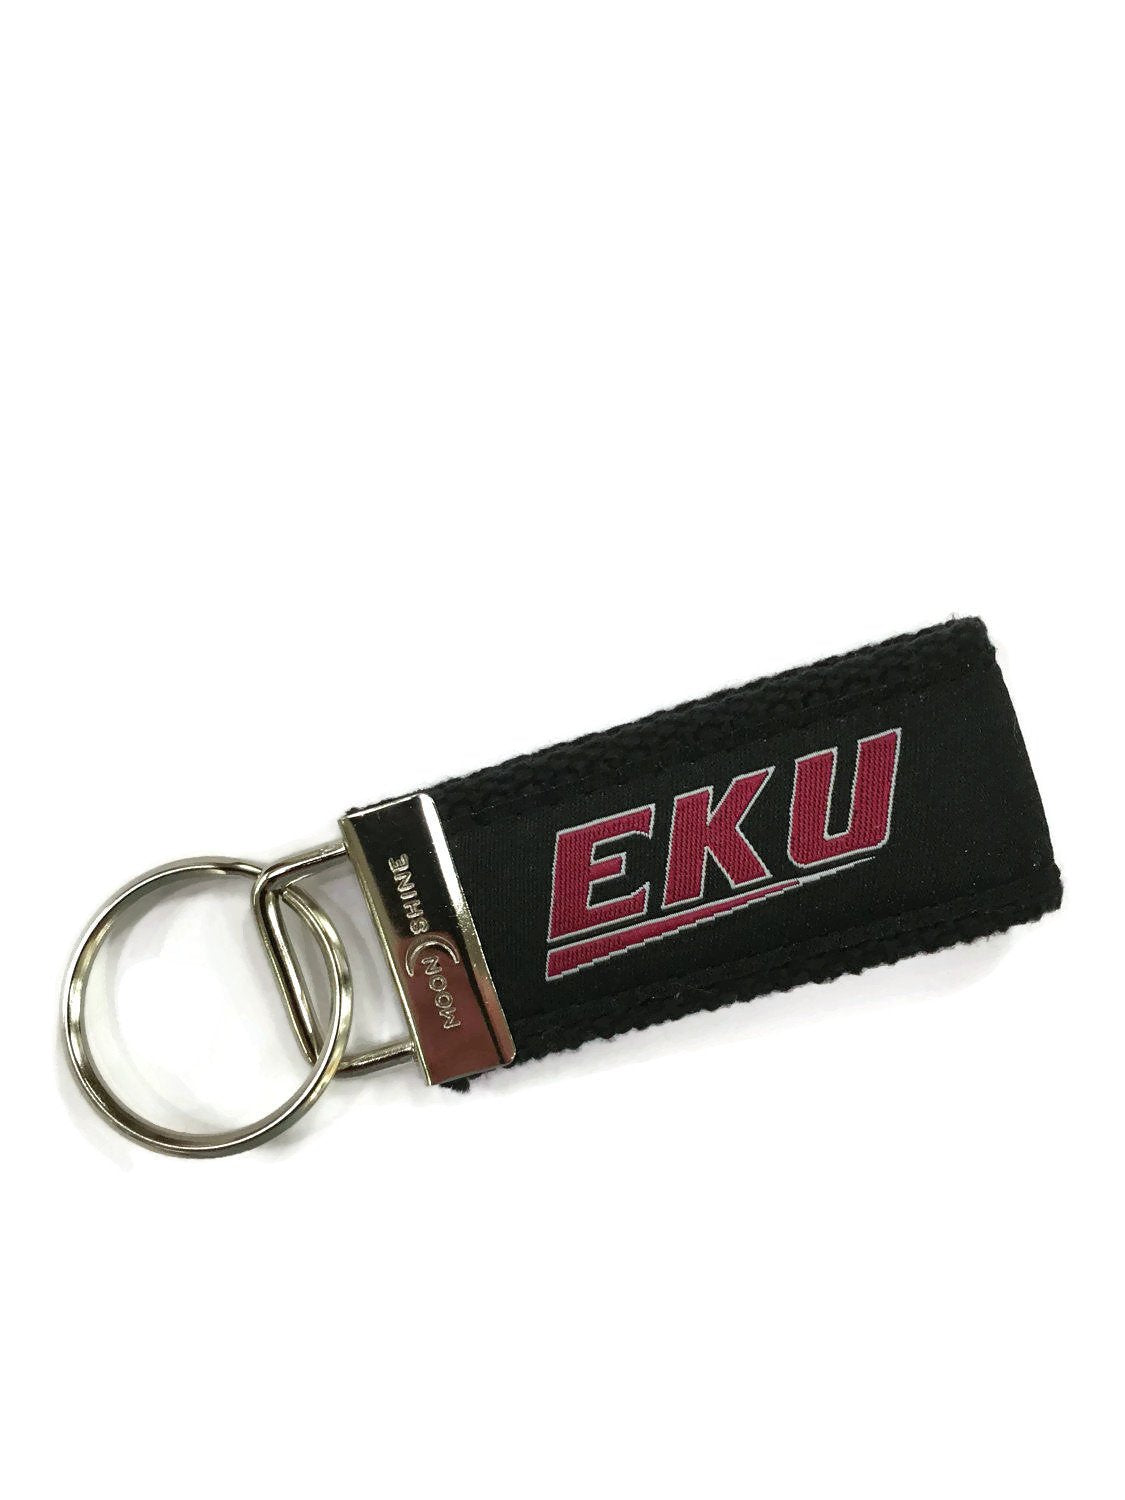 Eastern Kentucky University web key chains